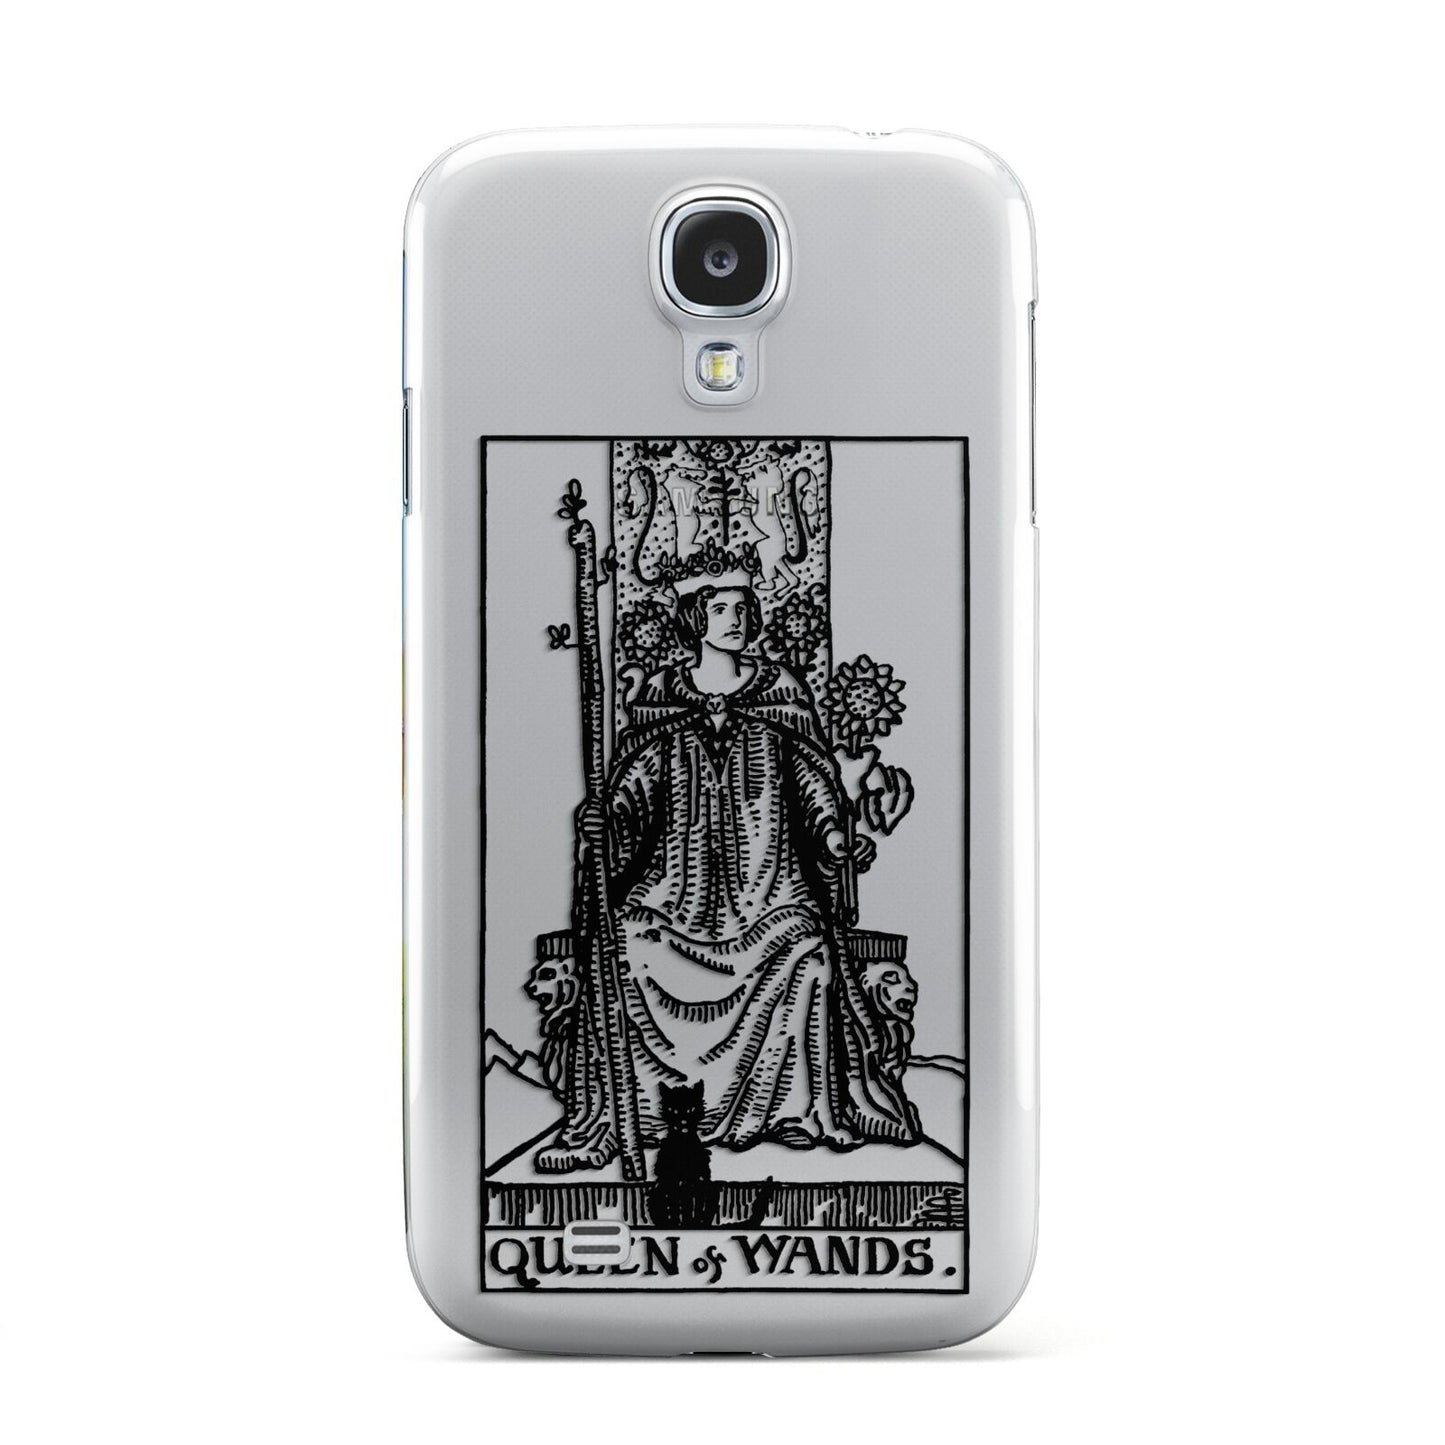 Queen of Wands Monochrome Samsung Galaxy S4 Case